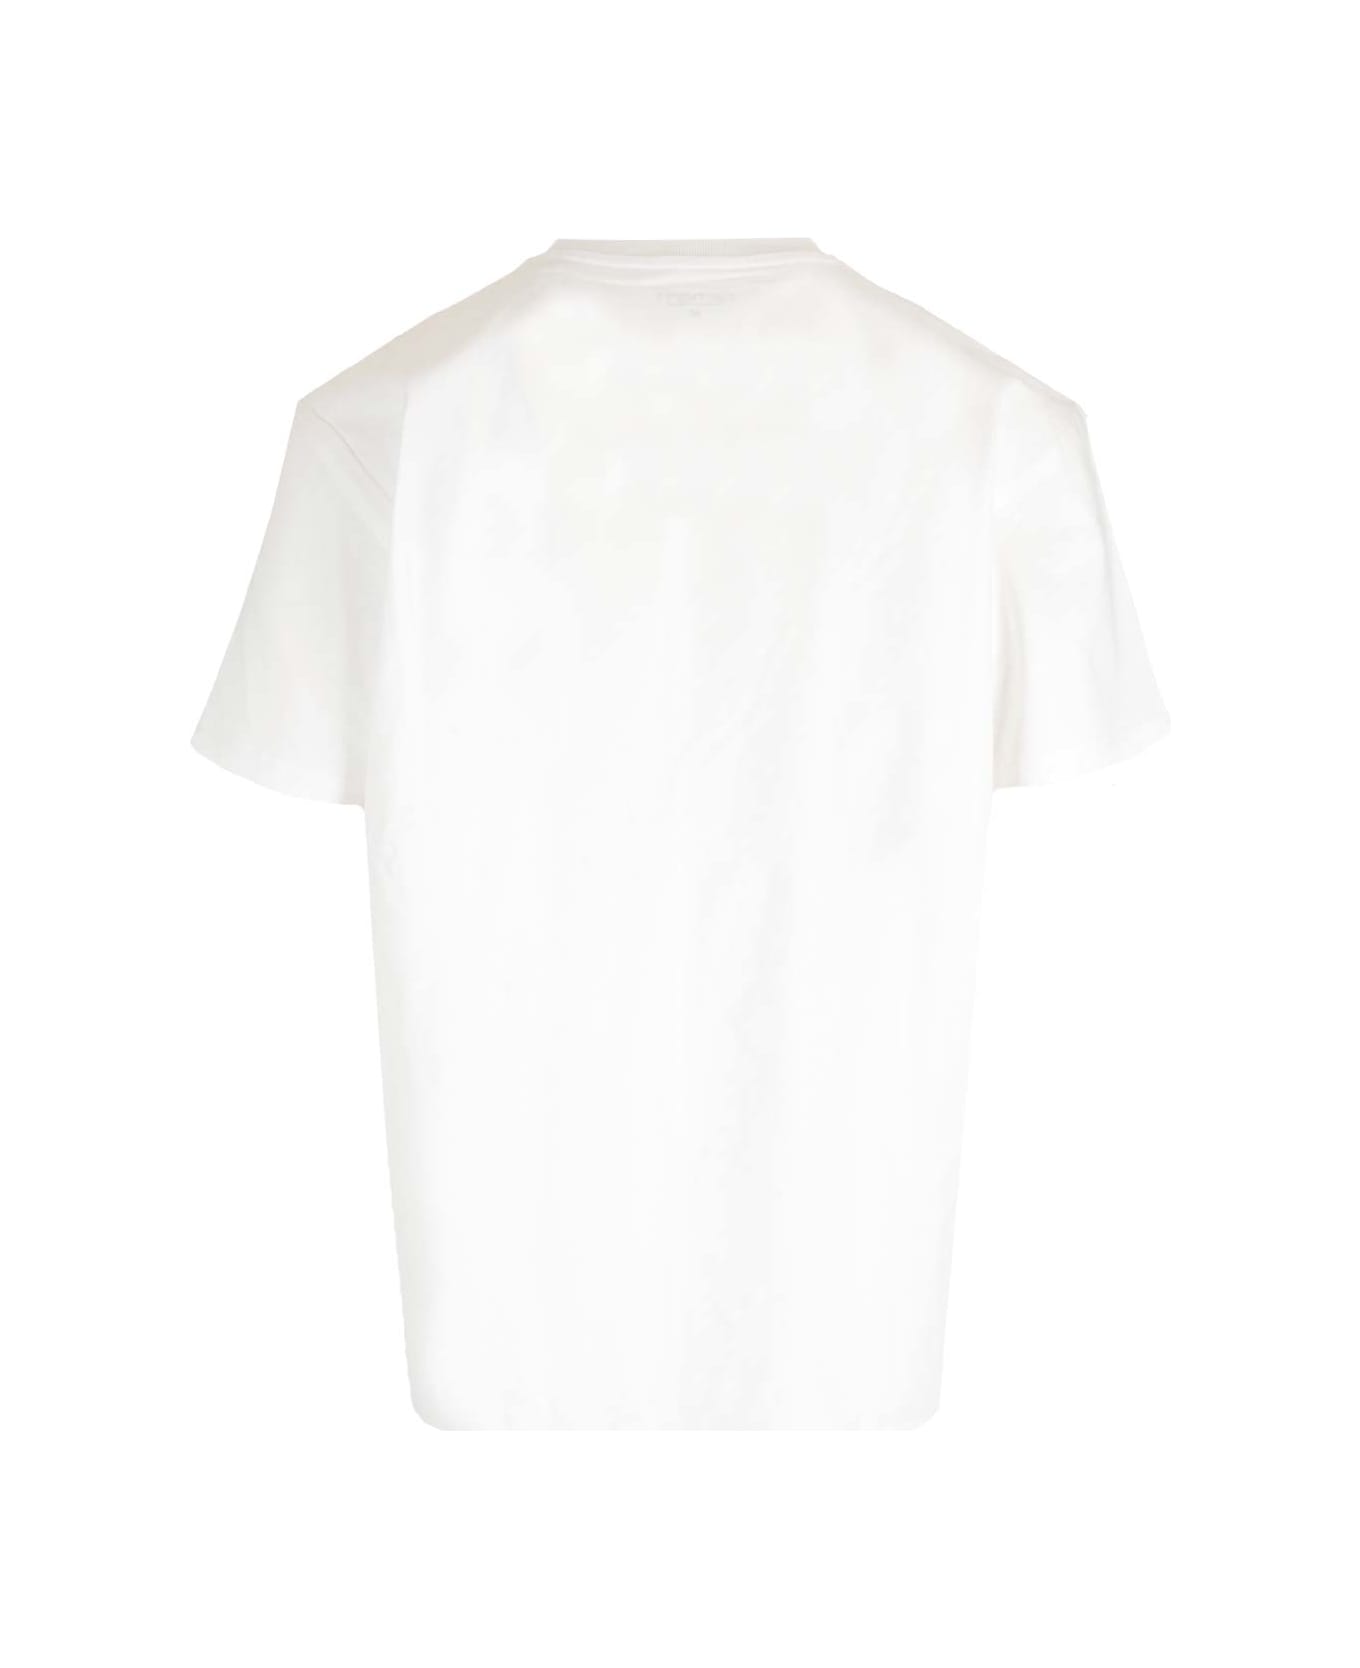 Carhartt T-shirt With Pocket - Bianco シャツ